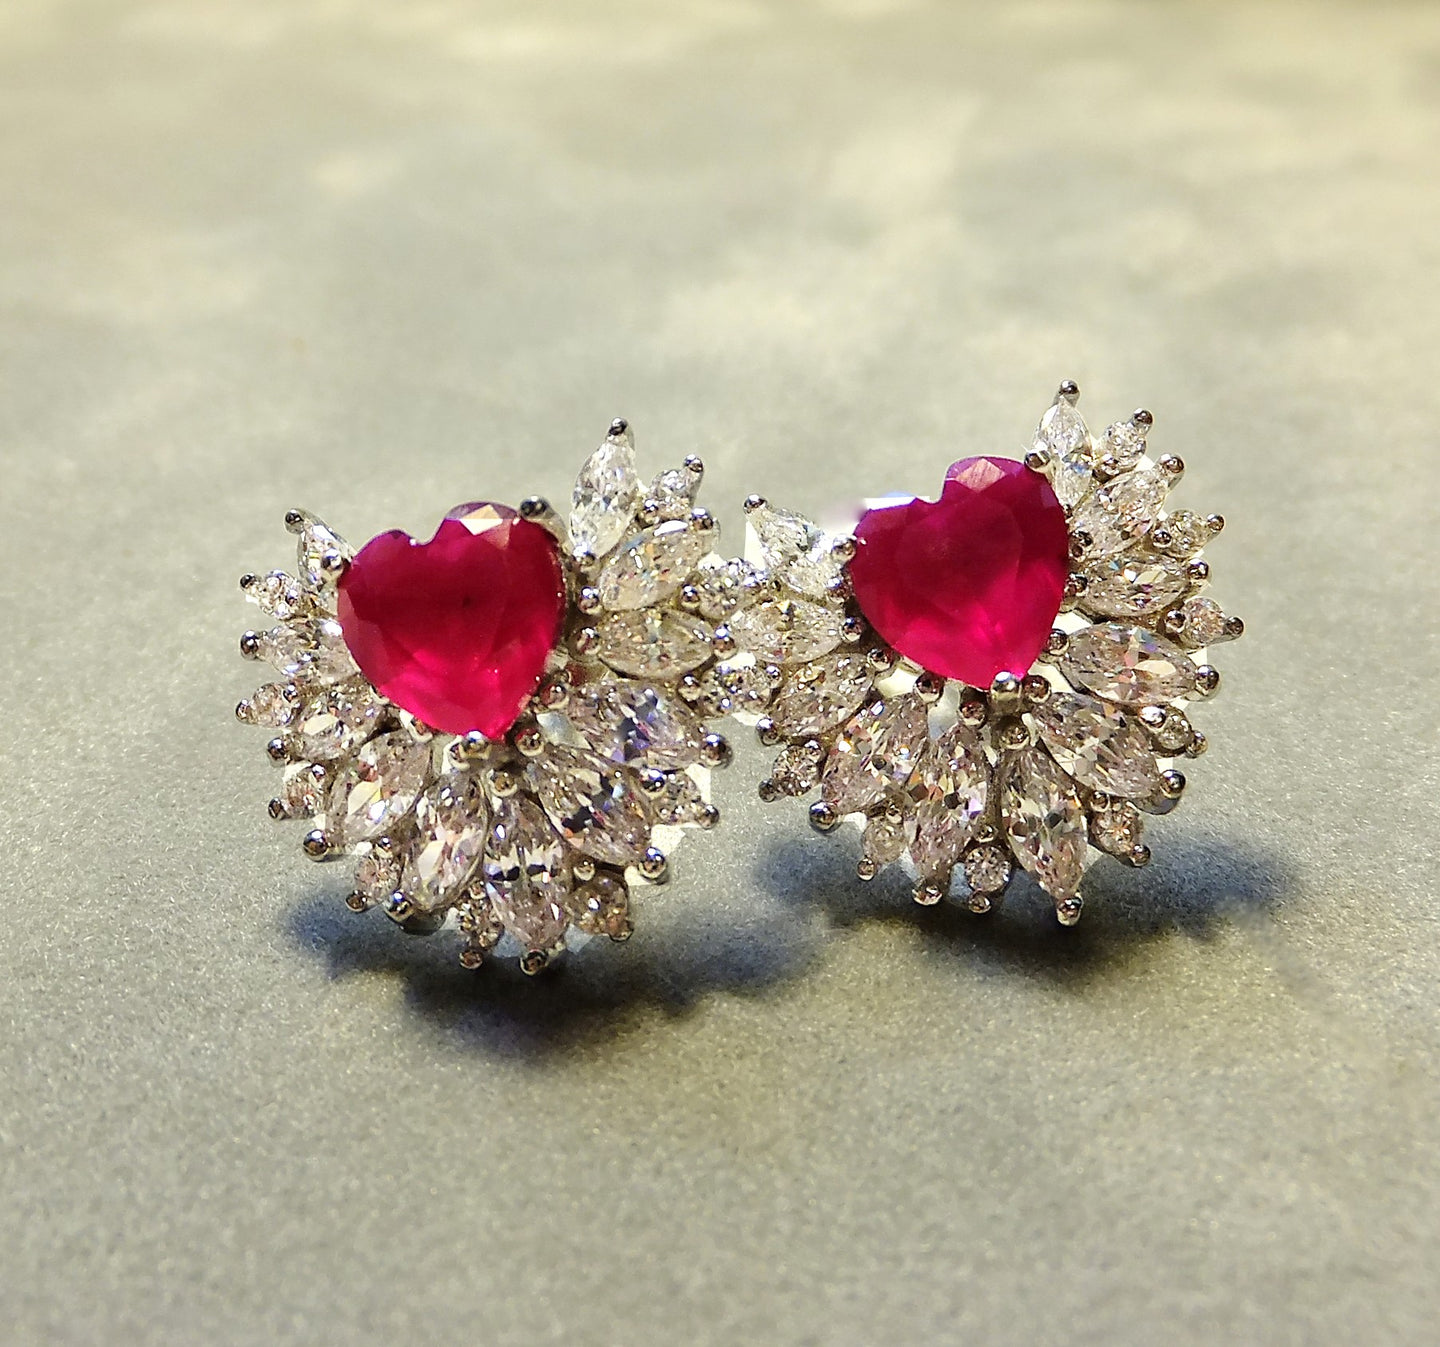 Ruby heart stud earrings with white topaz gemstones